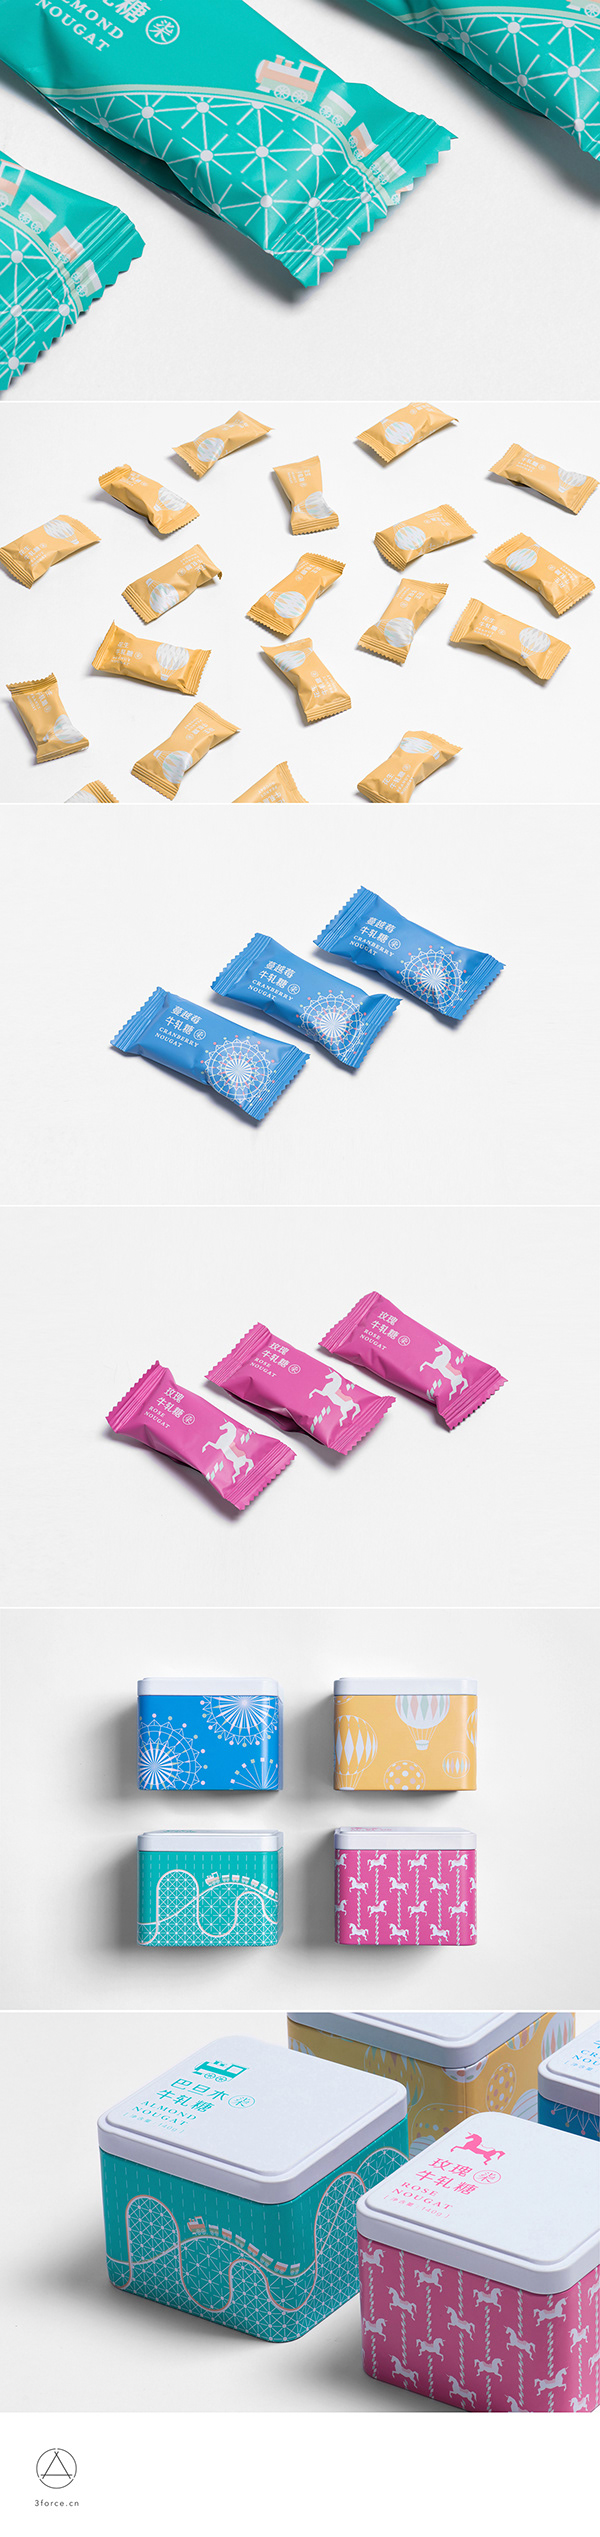 The 7th Store Nougat Packaging / 第七鋪牛軋糖包裝設計